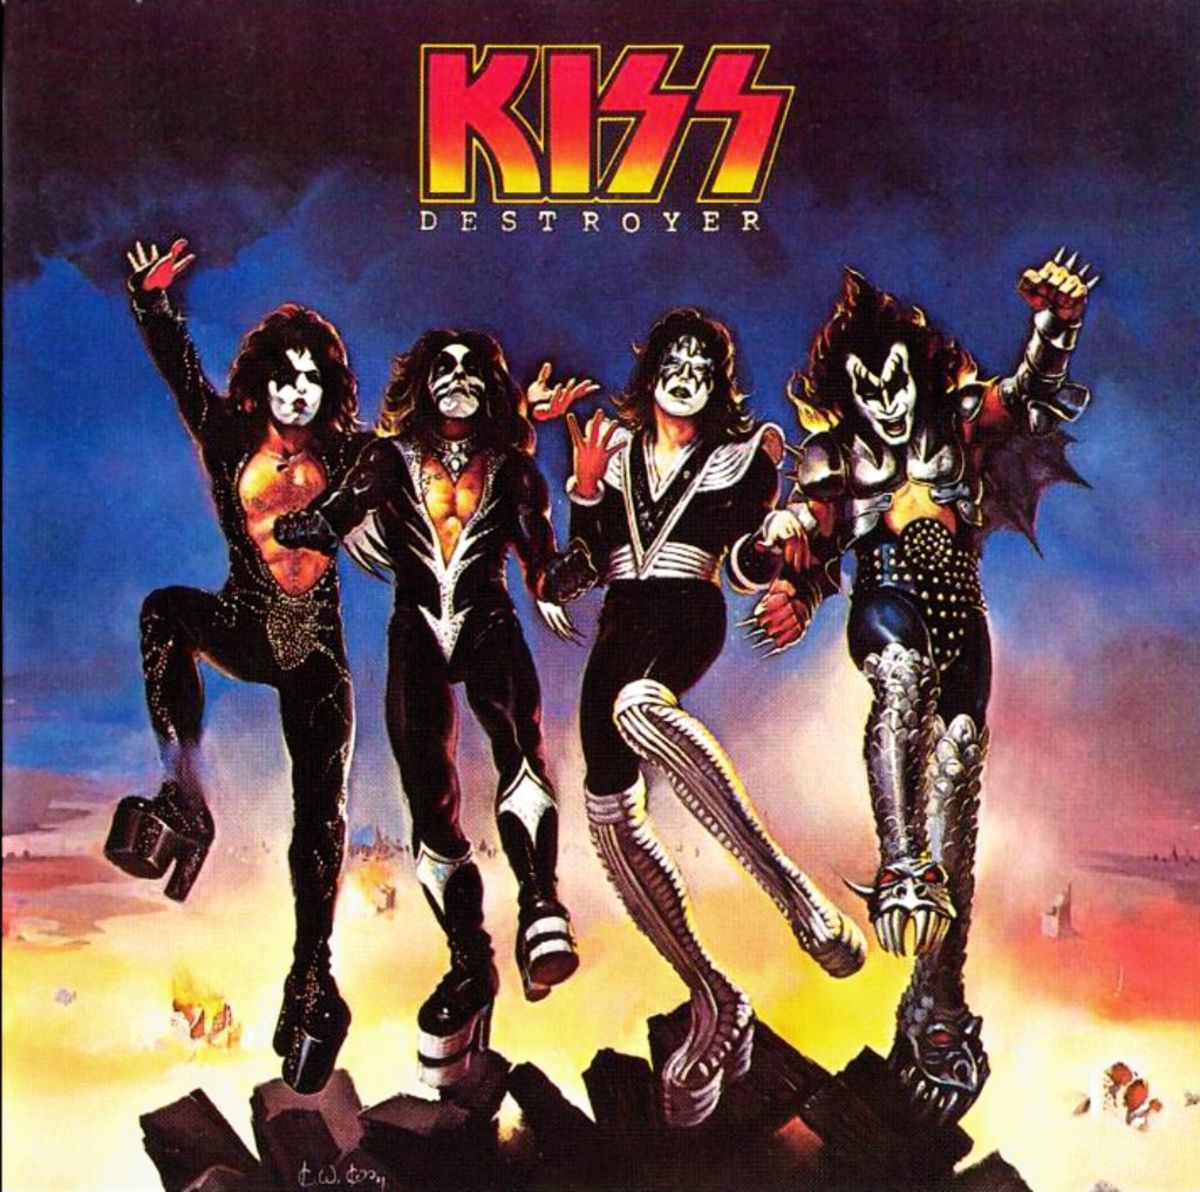 Destroyer (1976): The Concept Album that Established Kiss as Mega Stars